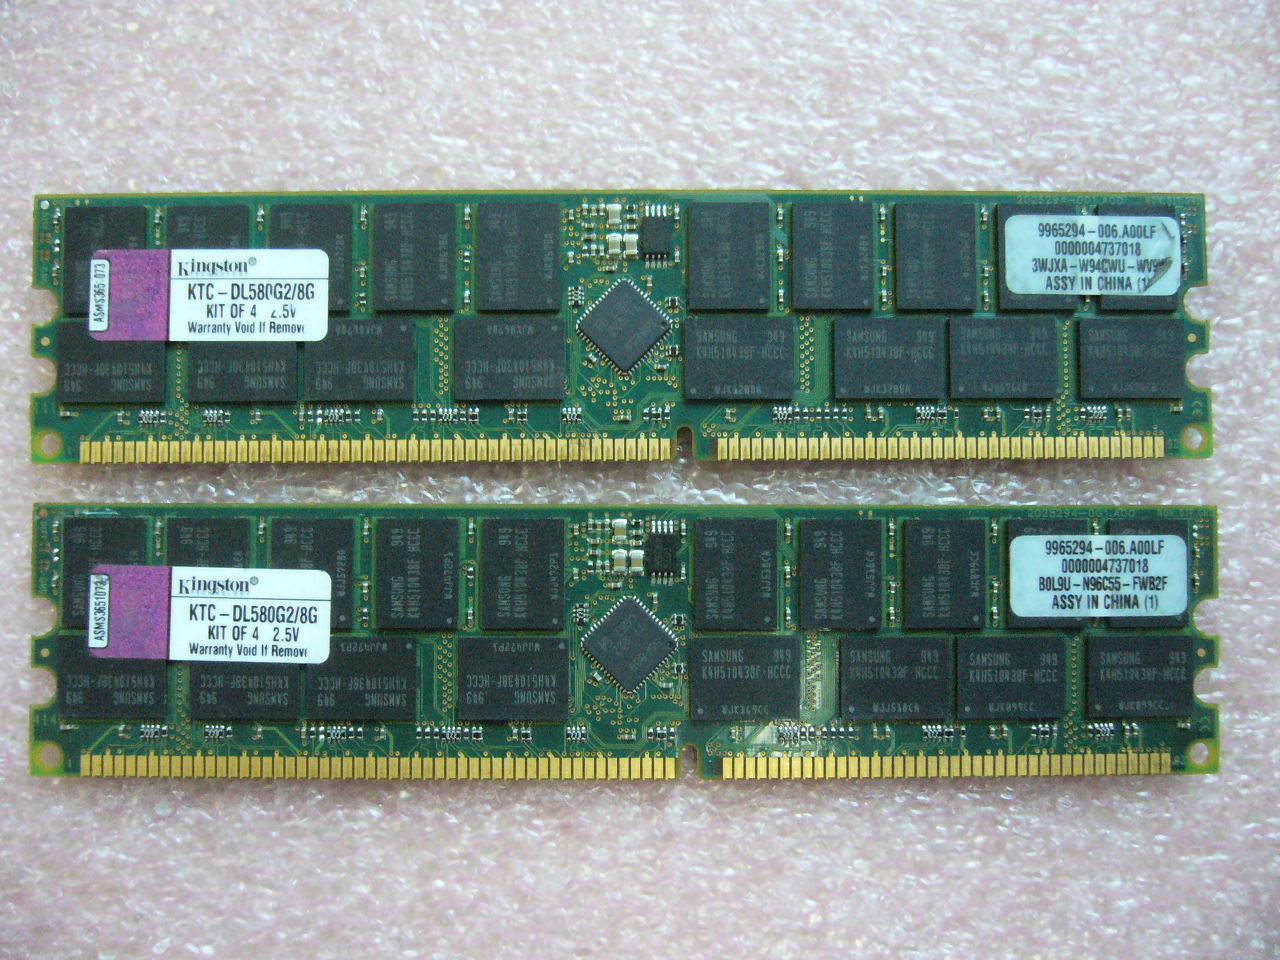 QTY 1x 2GB Module Kingston KTC-DL580G2/8G PC-1600R ECC Registered Server memory